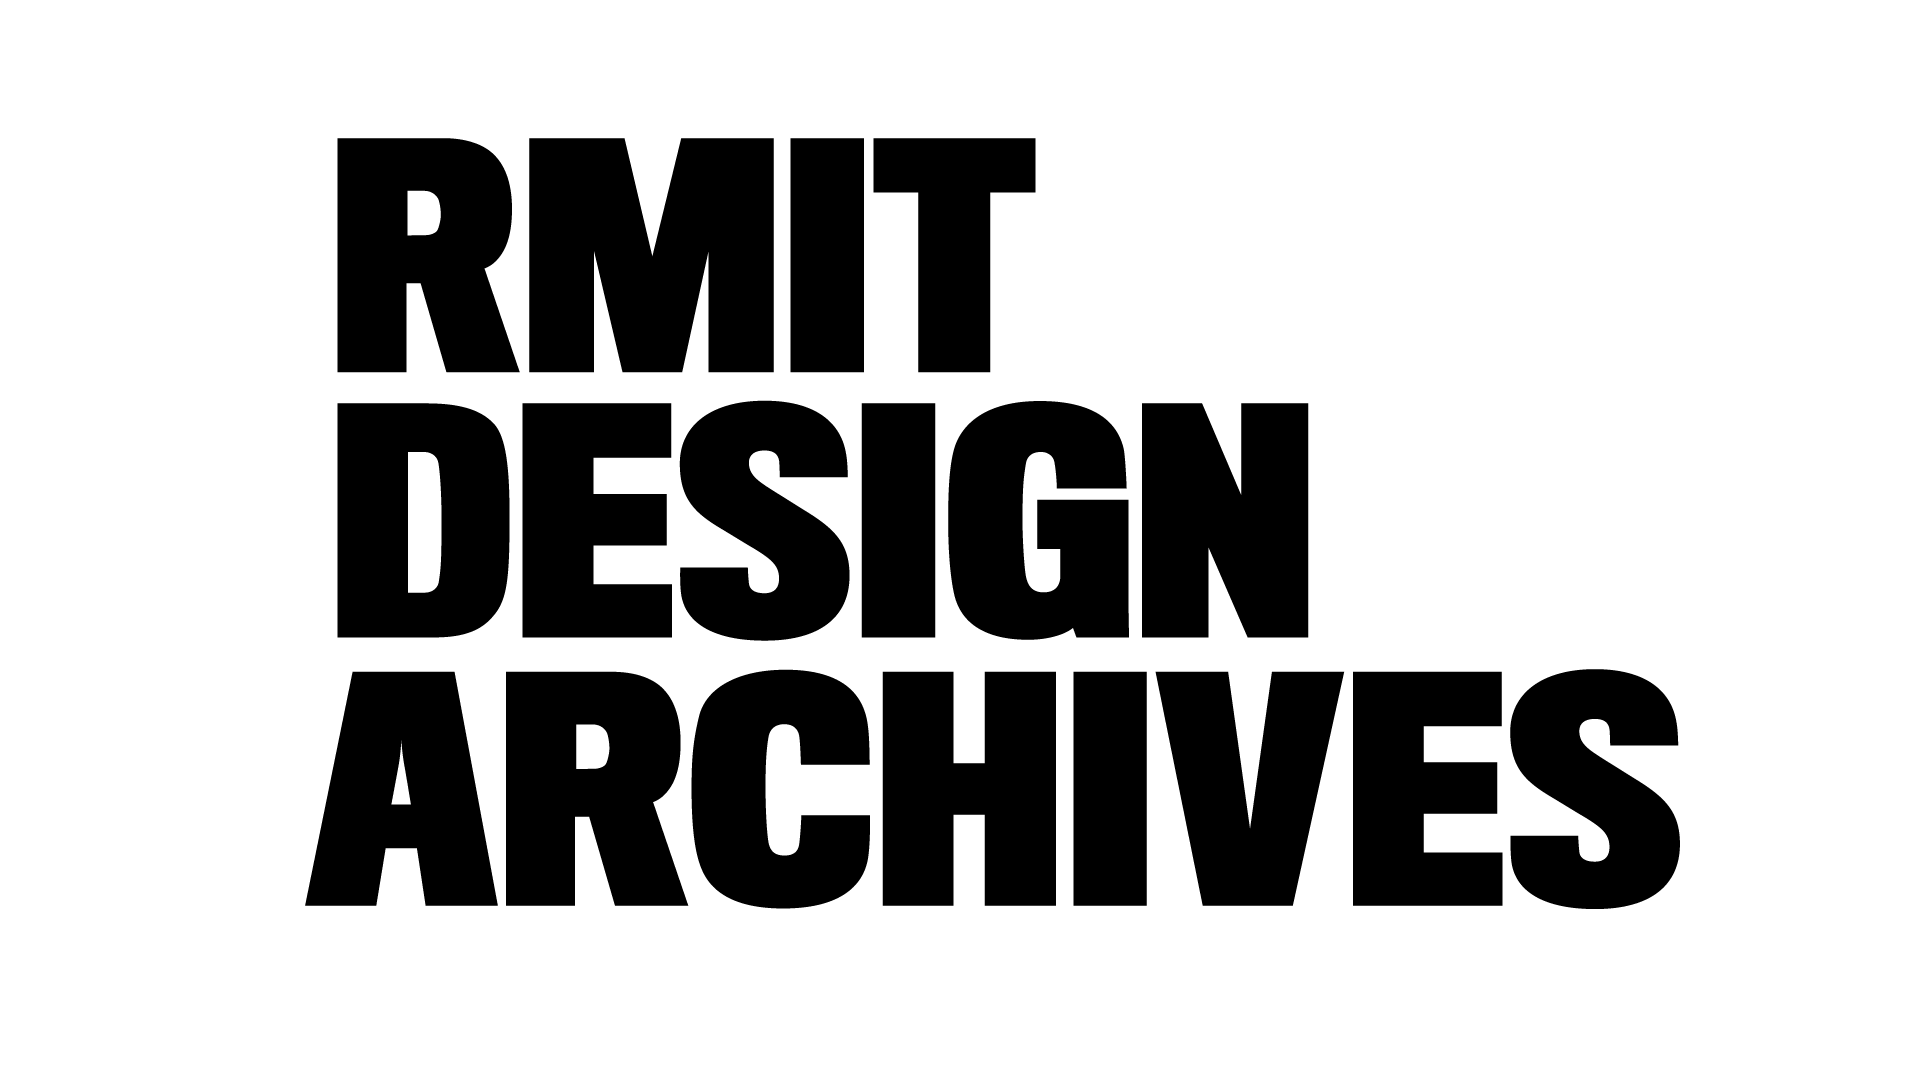 RMIT Design Archives logo